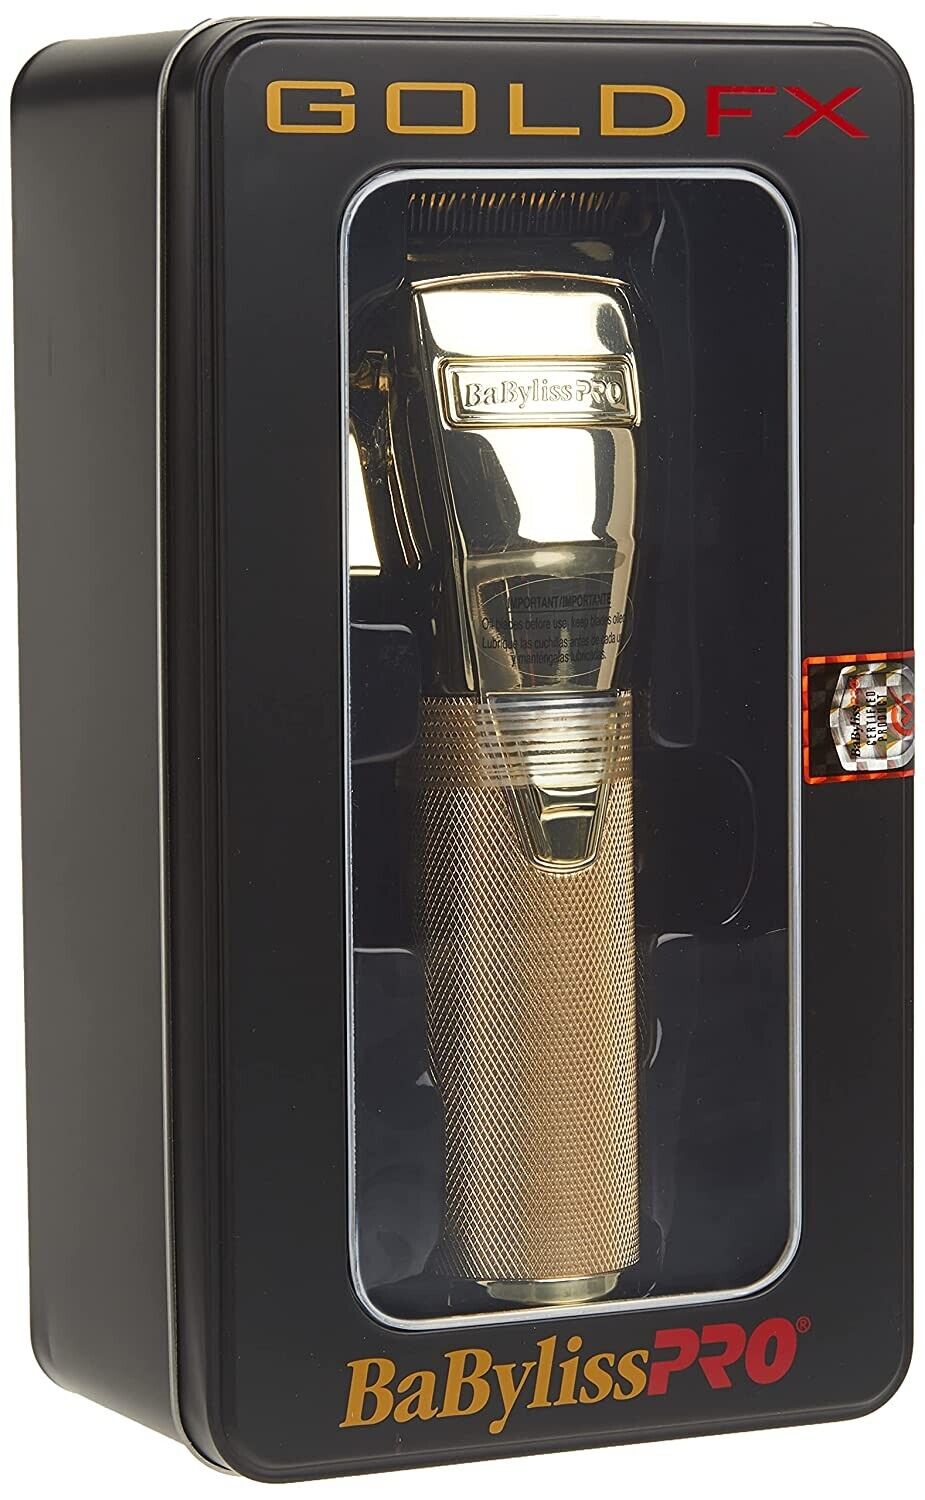 BaByliss Pro Gold FX870G Cordless Hair Clipper for sale online | eBay